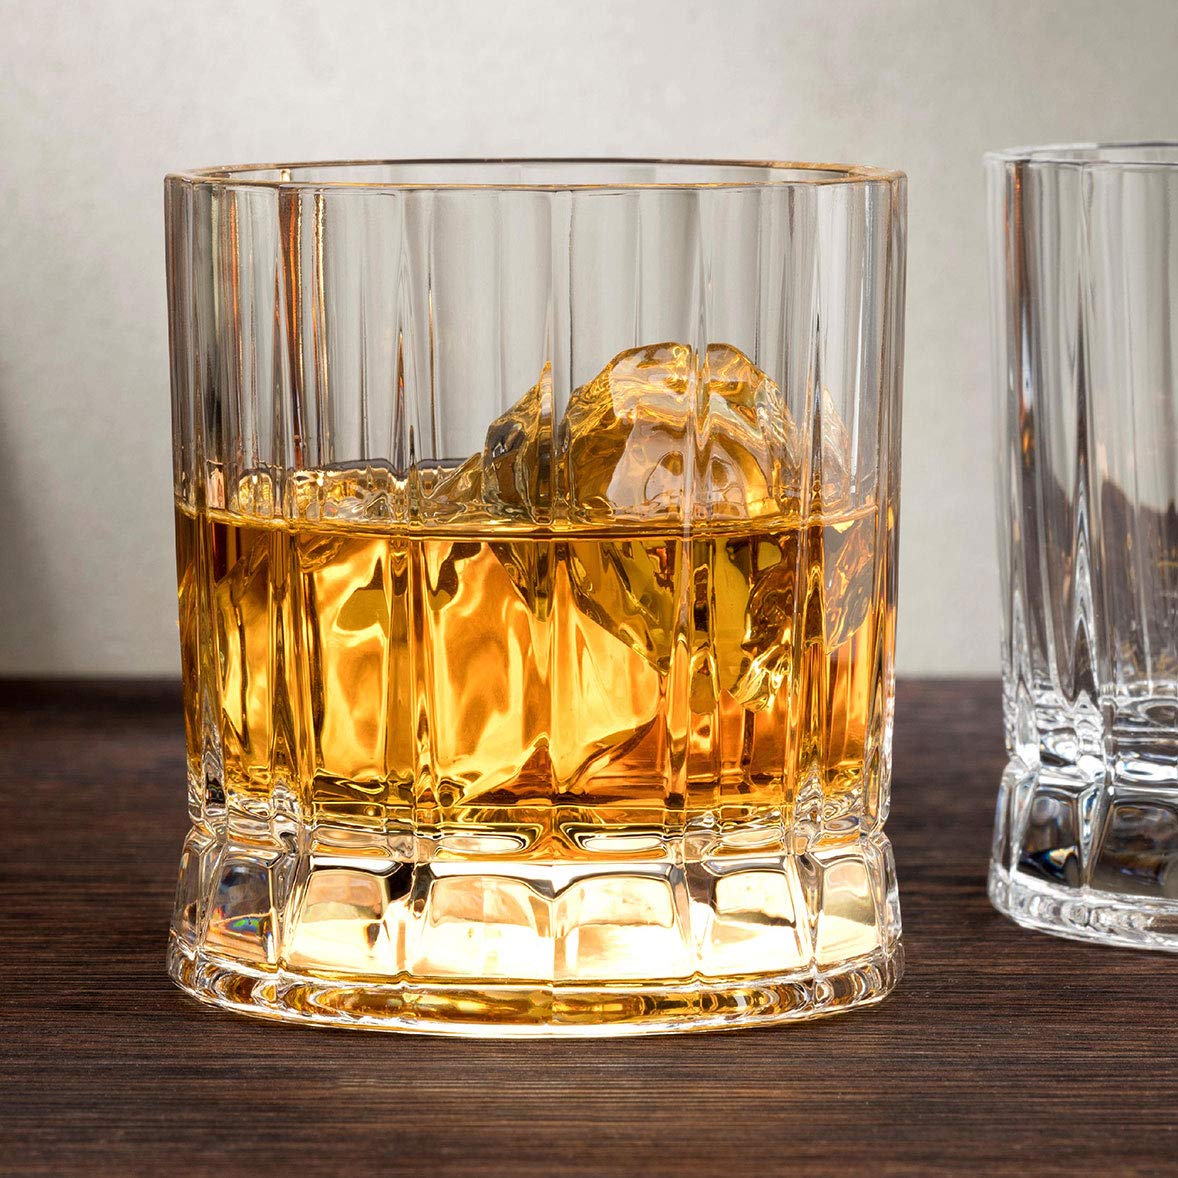 History Company Harry Truman “Kentucky Bourbon” Gentleman’s Crystal Whiskey Glass, 2-Piece Set (Gift Box Collection)